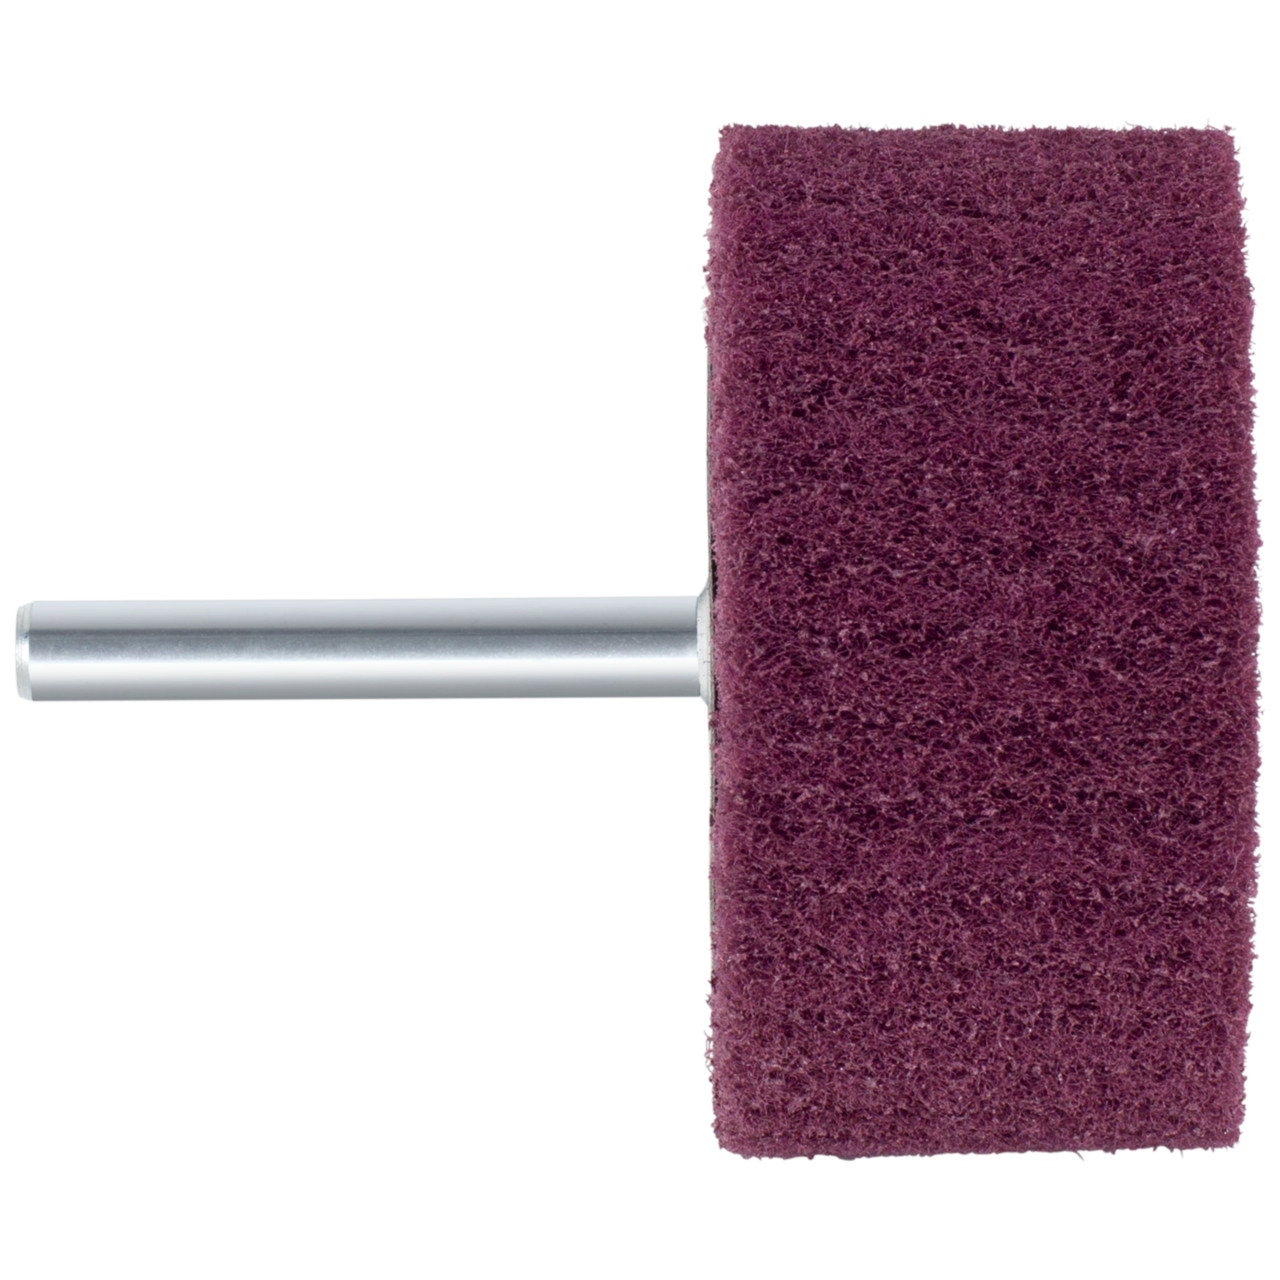 TYROLIT fleece pins DxT 60x30 For steel, stainless steel and non-ferrous metals, A FEIN, shape: 52LA, Art. 908794